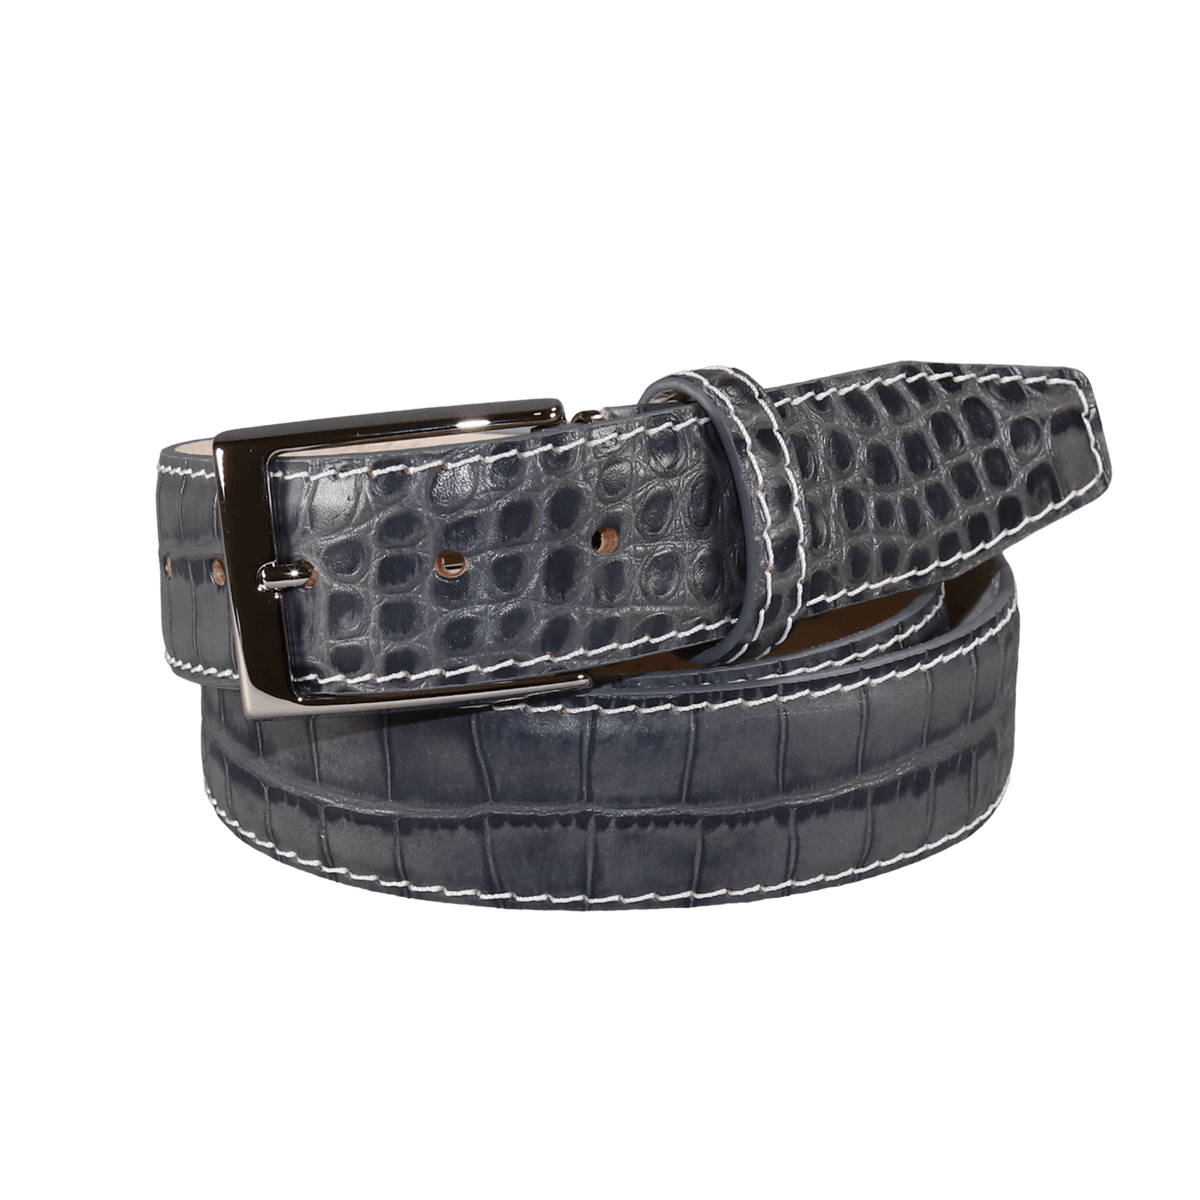 Men's Belts for Sale -   Embroidered leather, Nautical belt, Mens belts